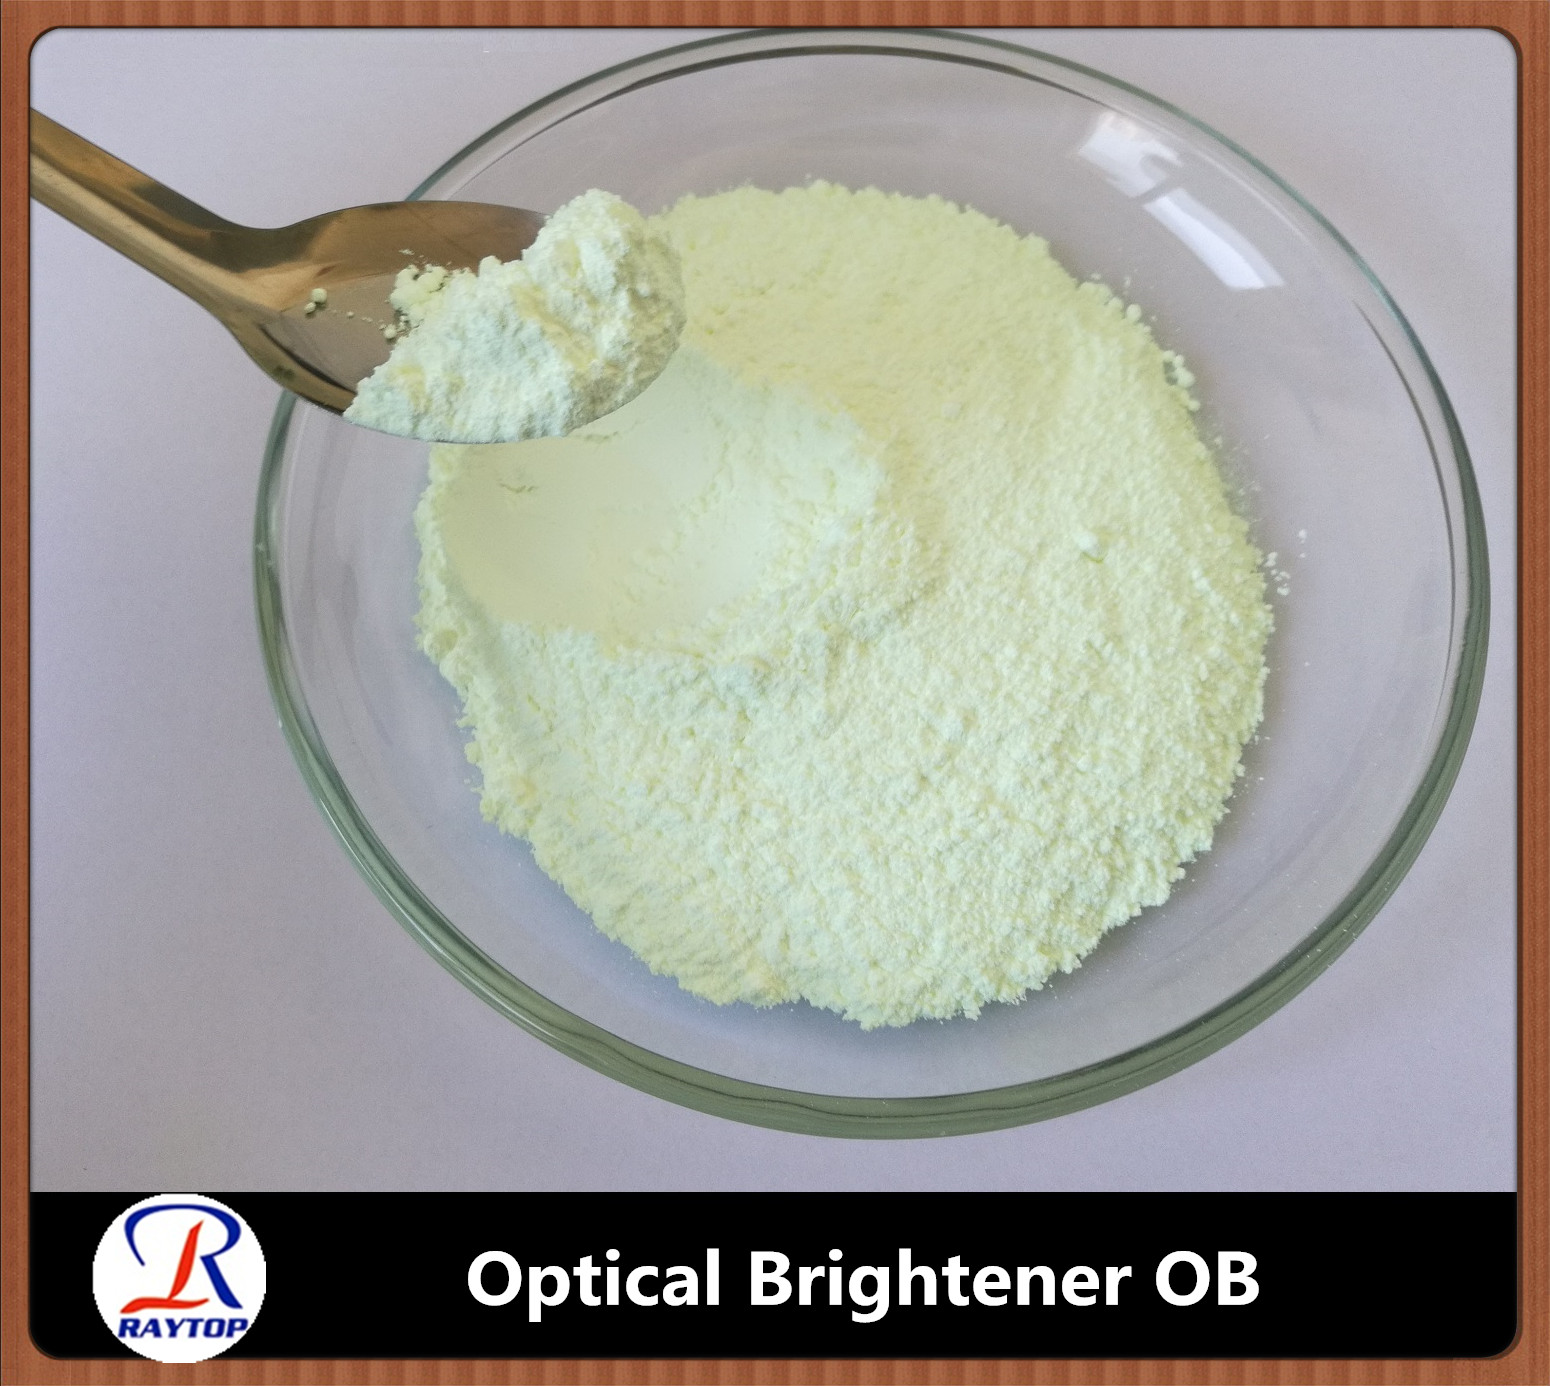 China factory supply optical brightener OB for PE（polyethylene）